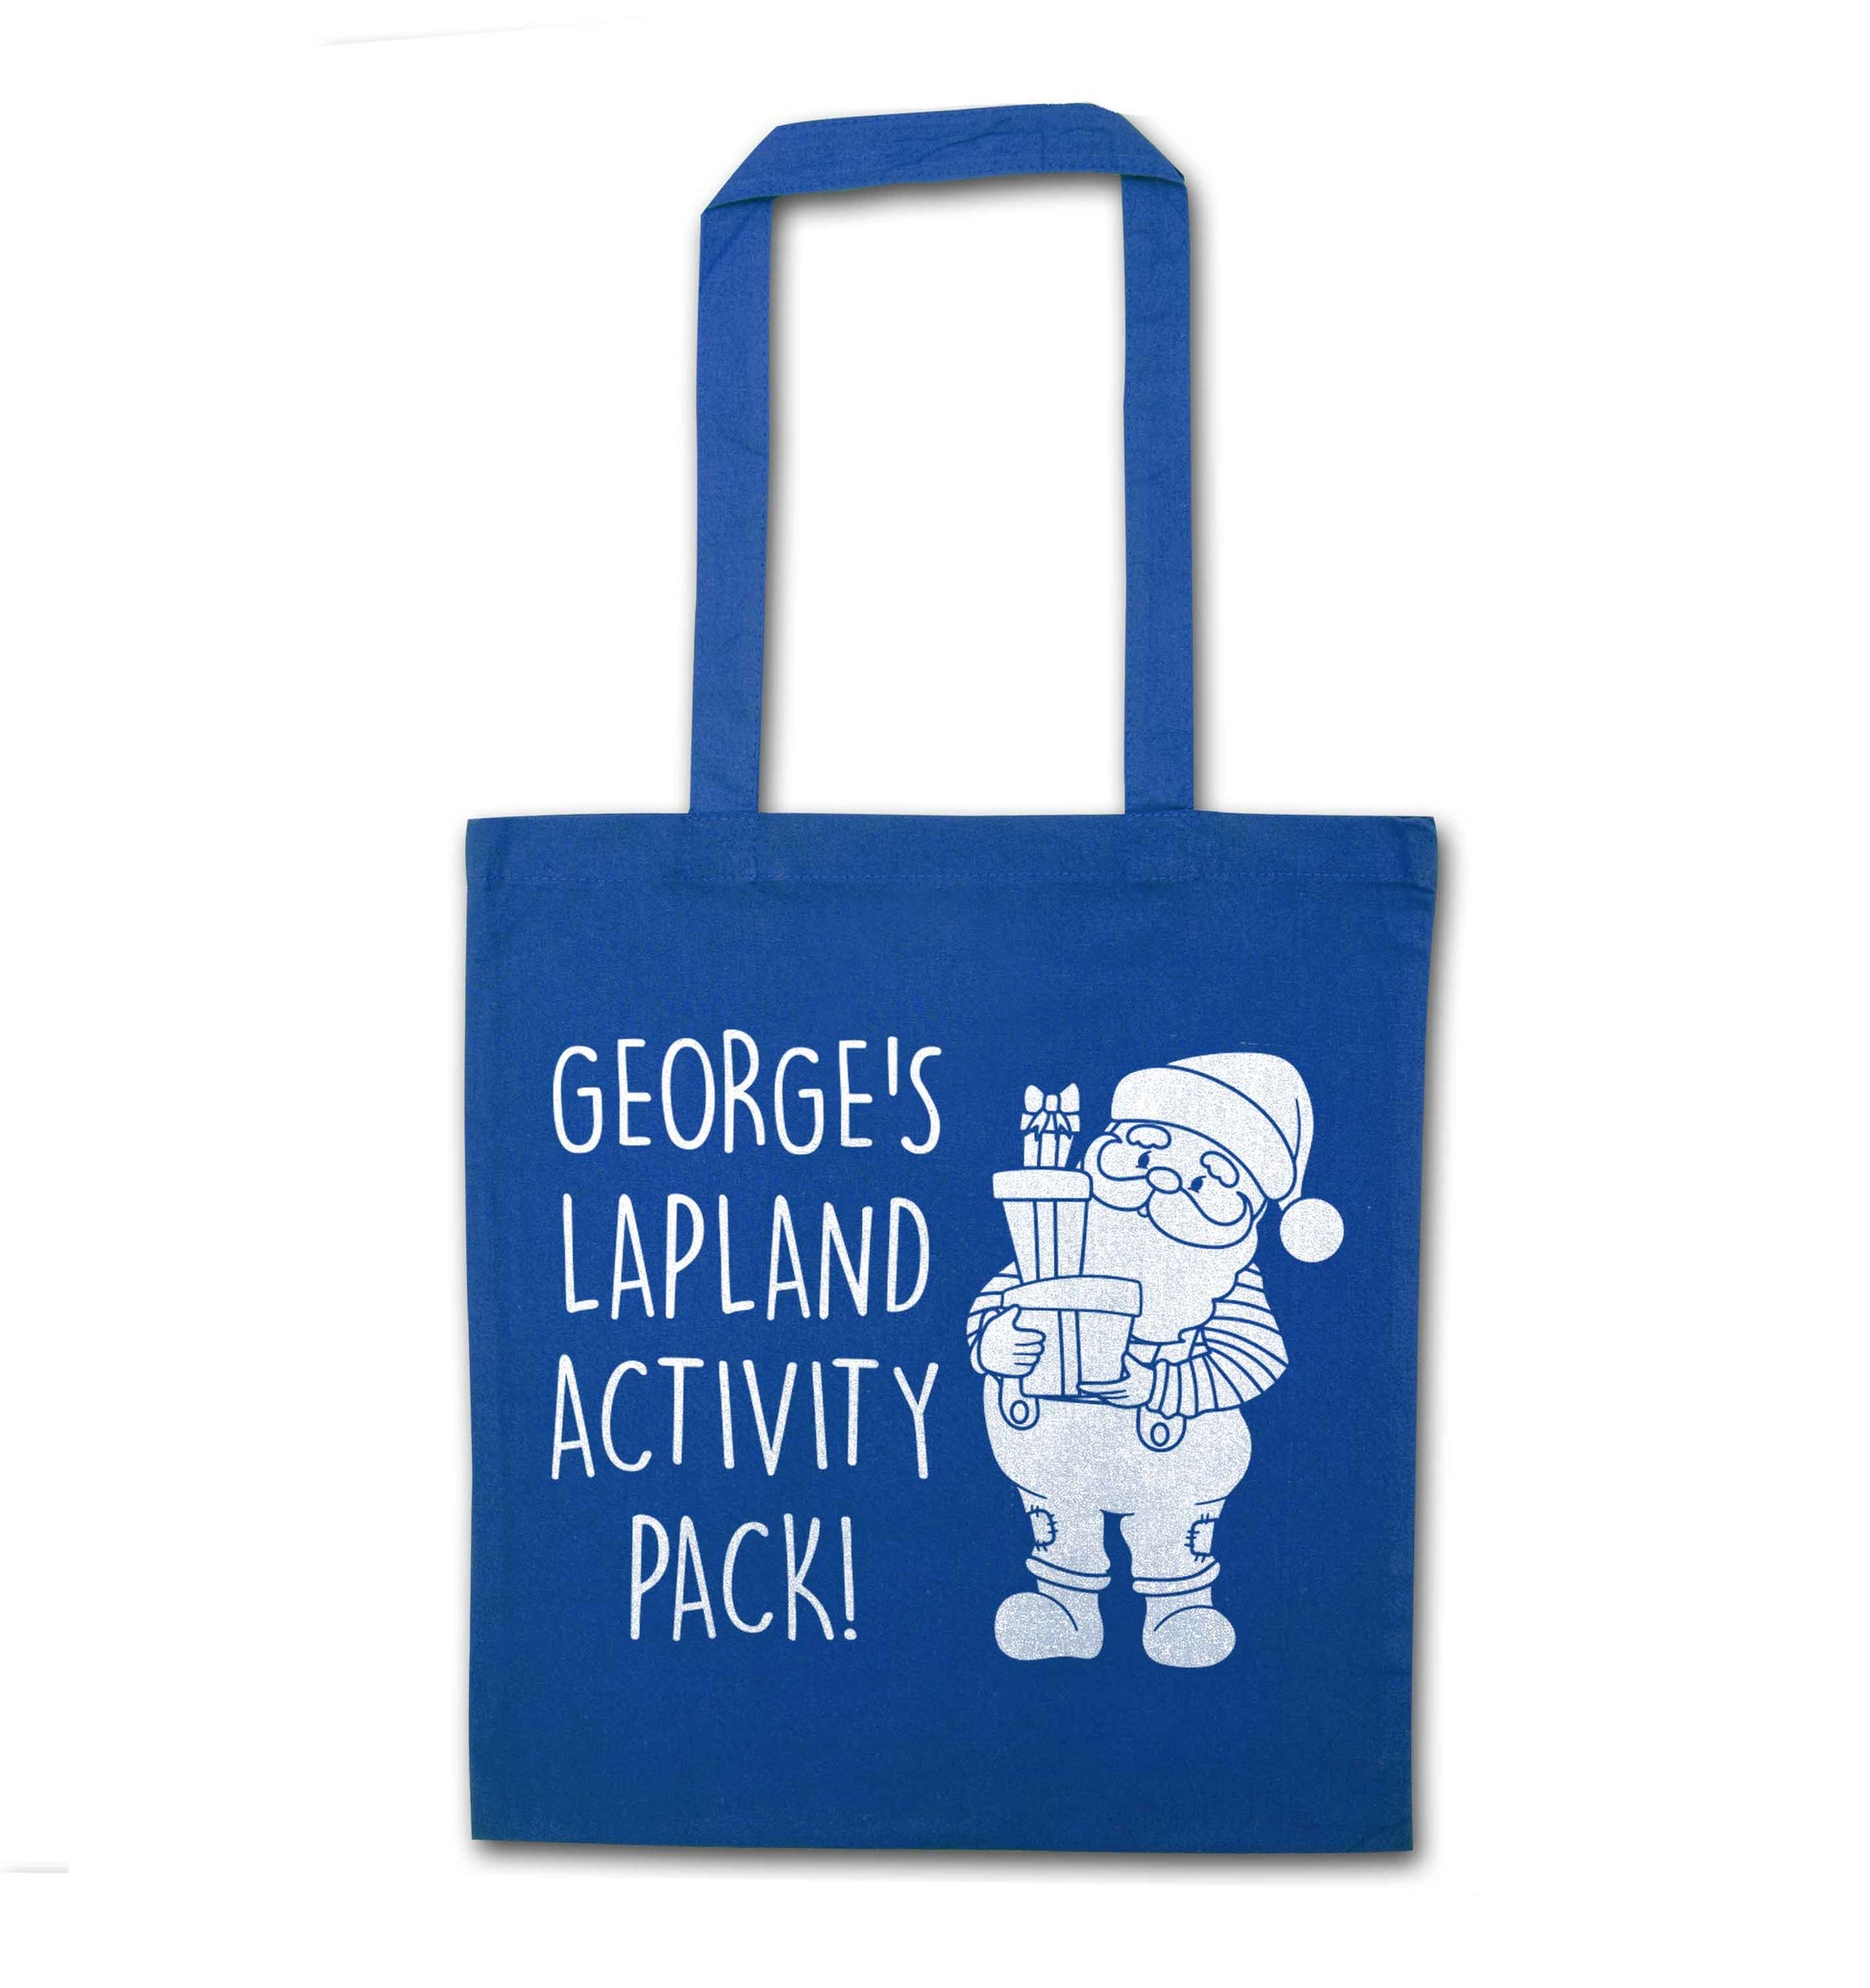 Custom Lapland activity pack blue tote bag